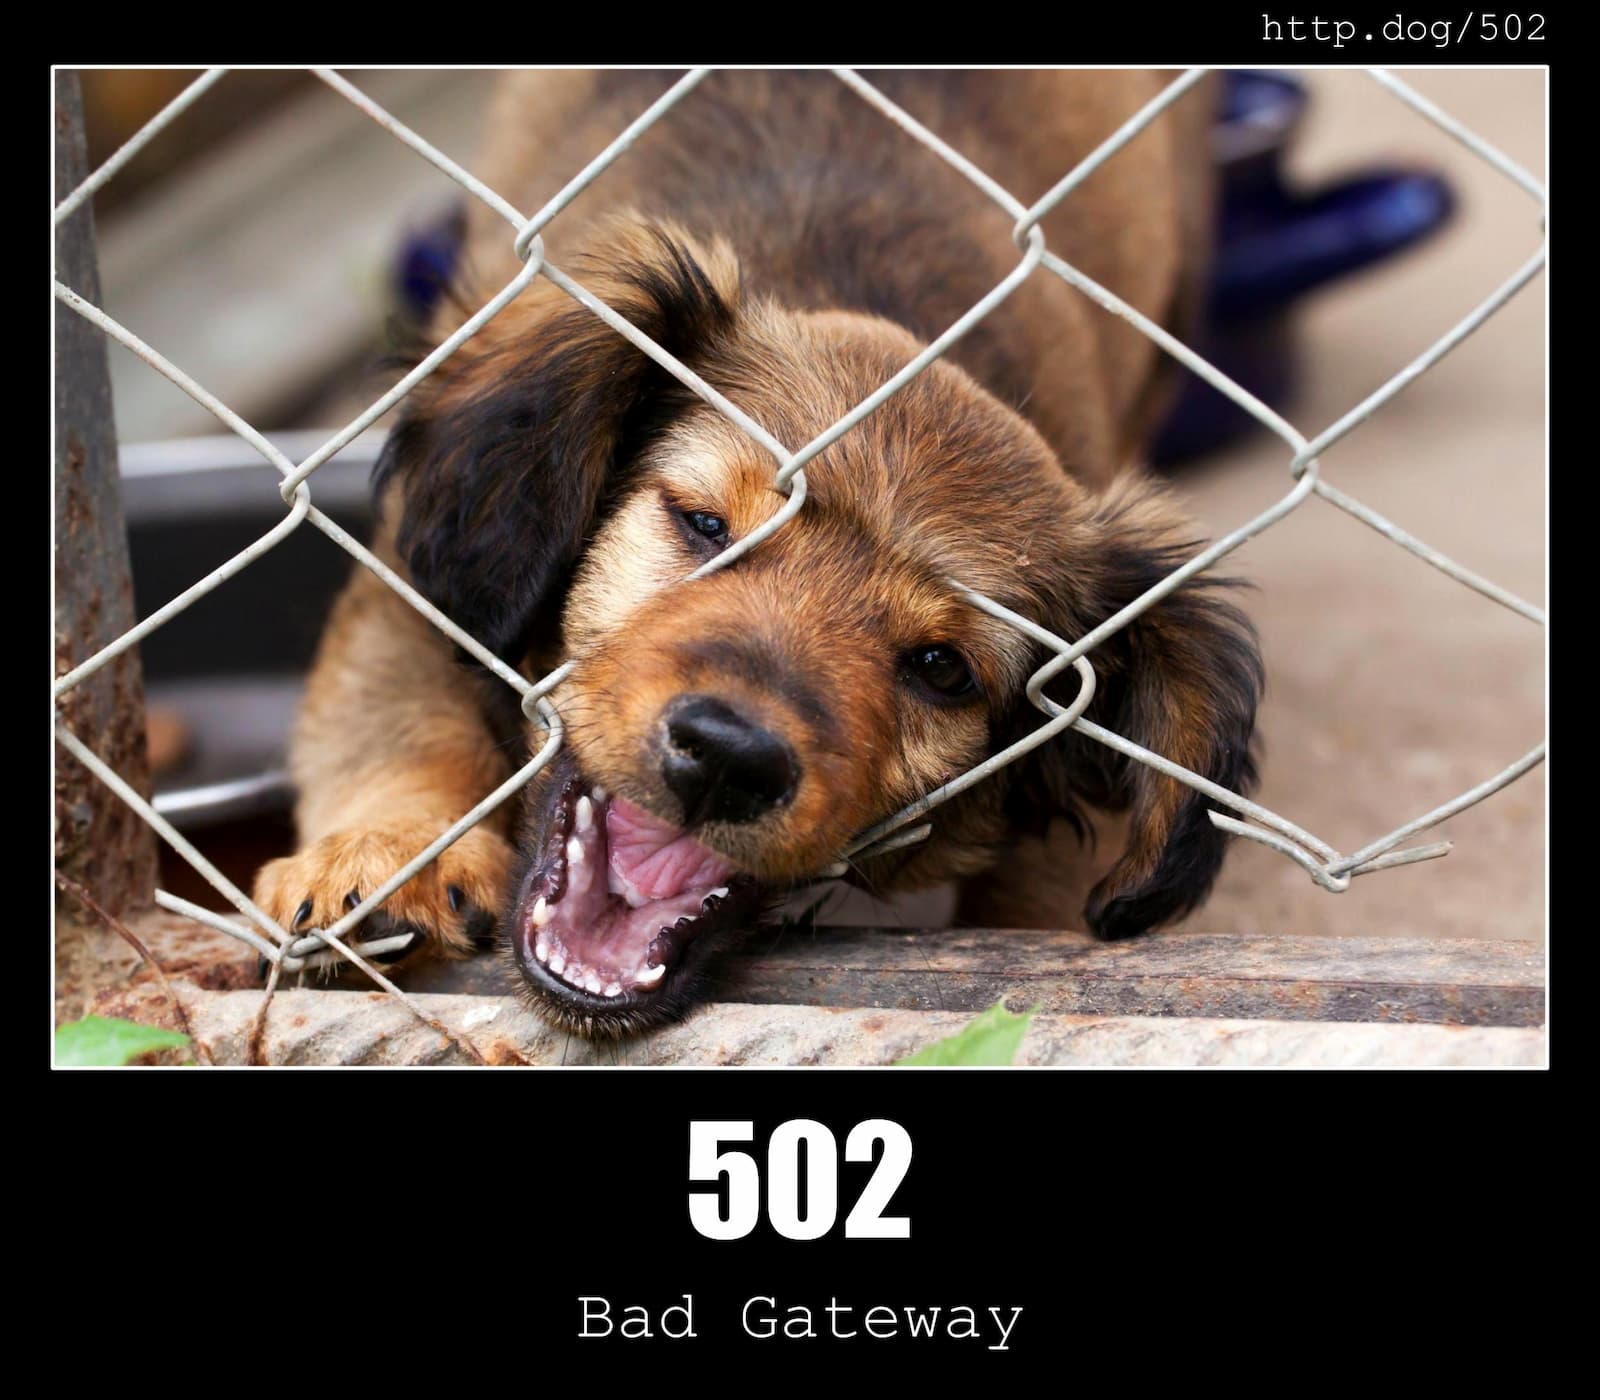 HTTP Status Code 502 Bad Gateway & Dogs